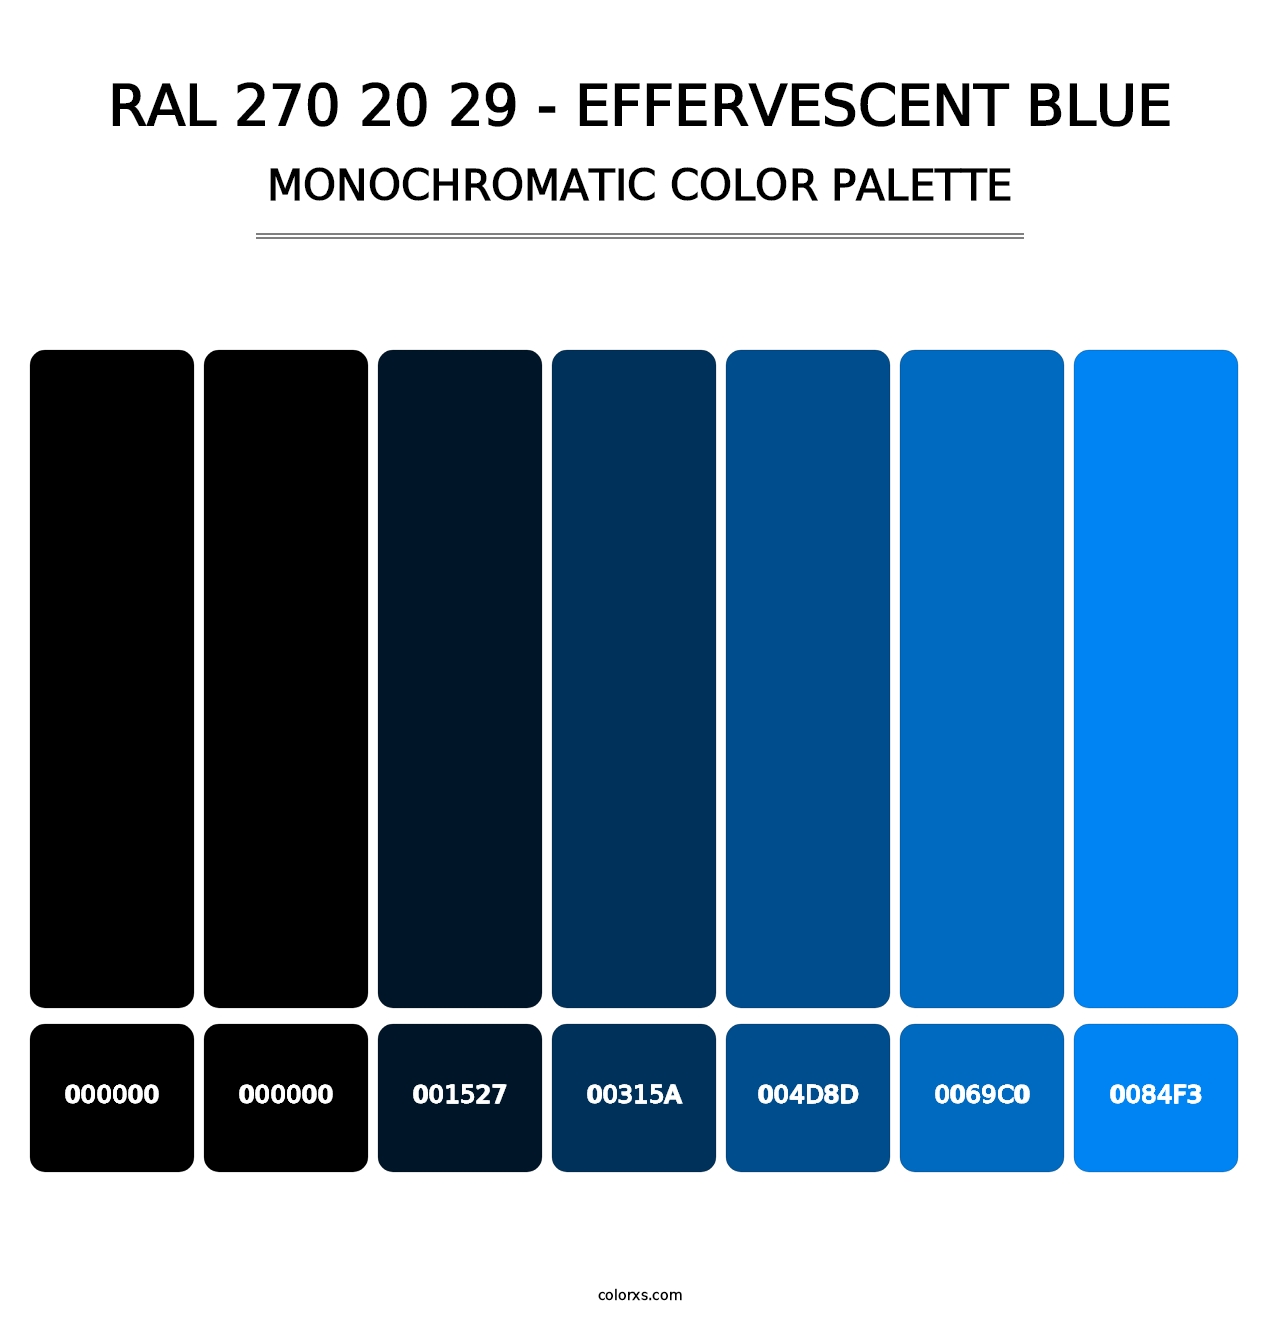 RAL 270 20 29 - Effervescent Blue - Monochromatic Color Palette